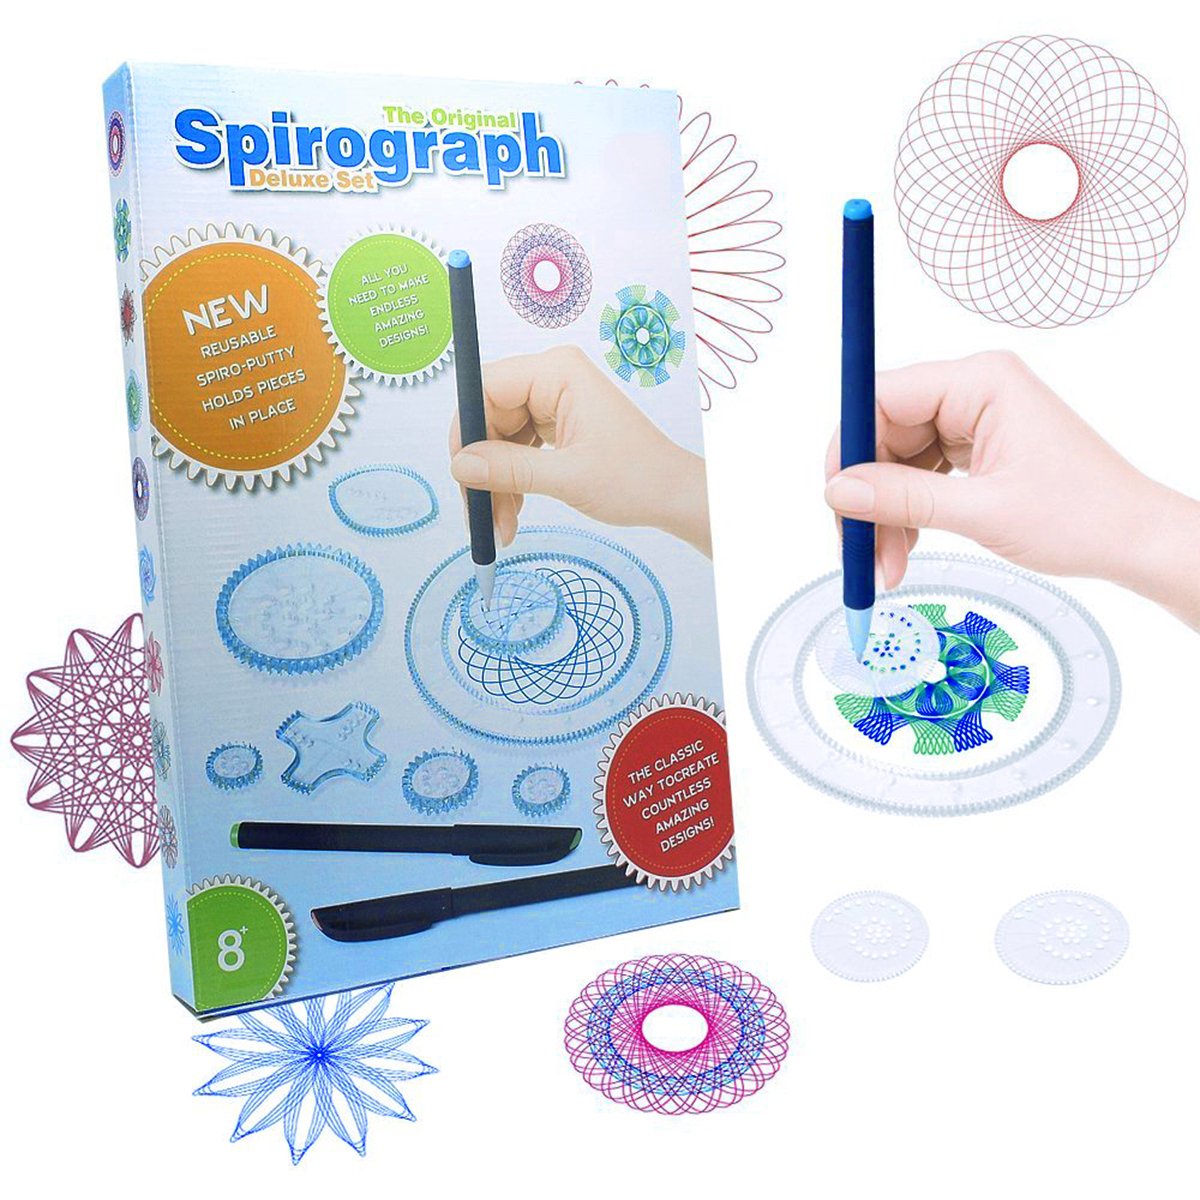 Original Spirograph Design Set Geometric Drawing Ruler Kids Spiral Art Craft Creation Education Toy 1